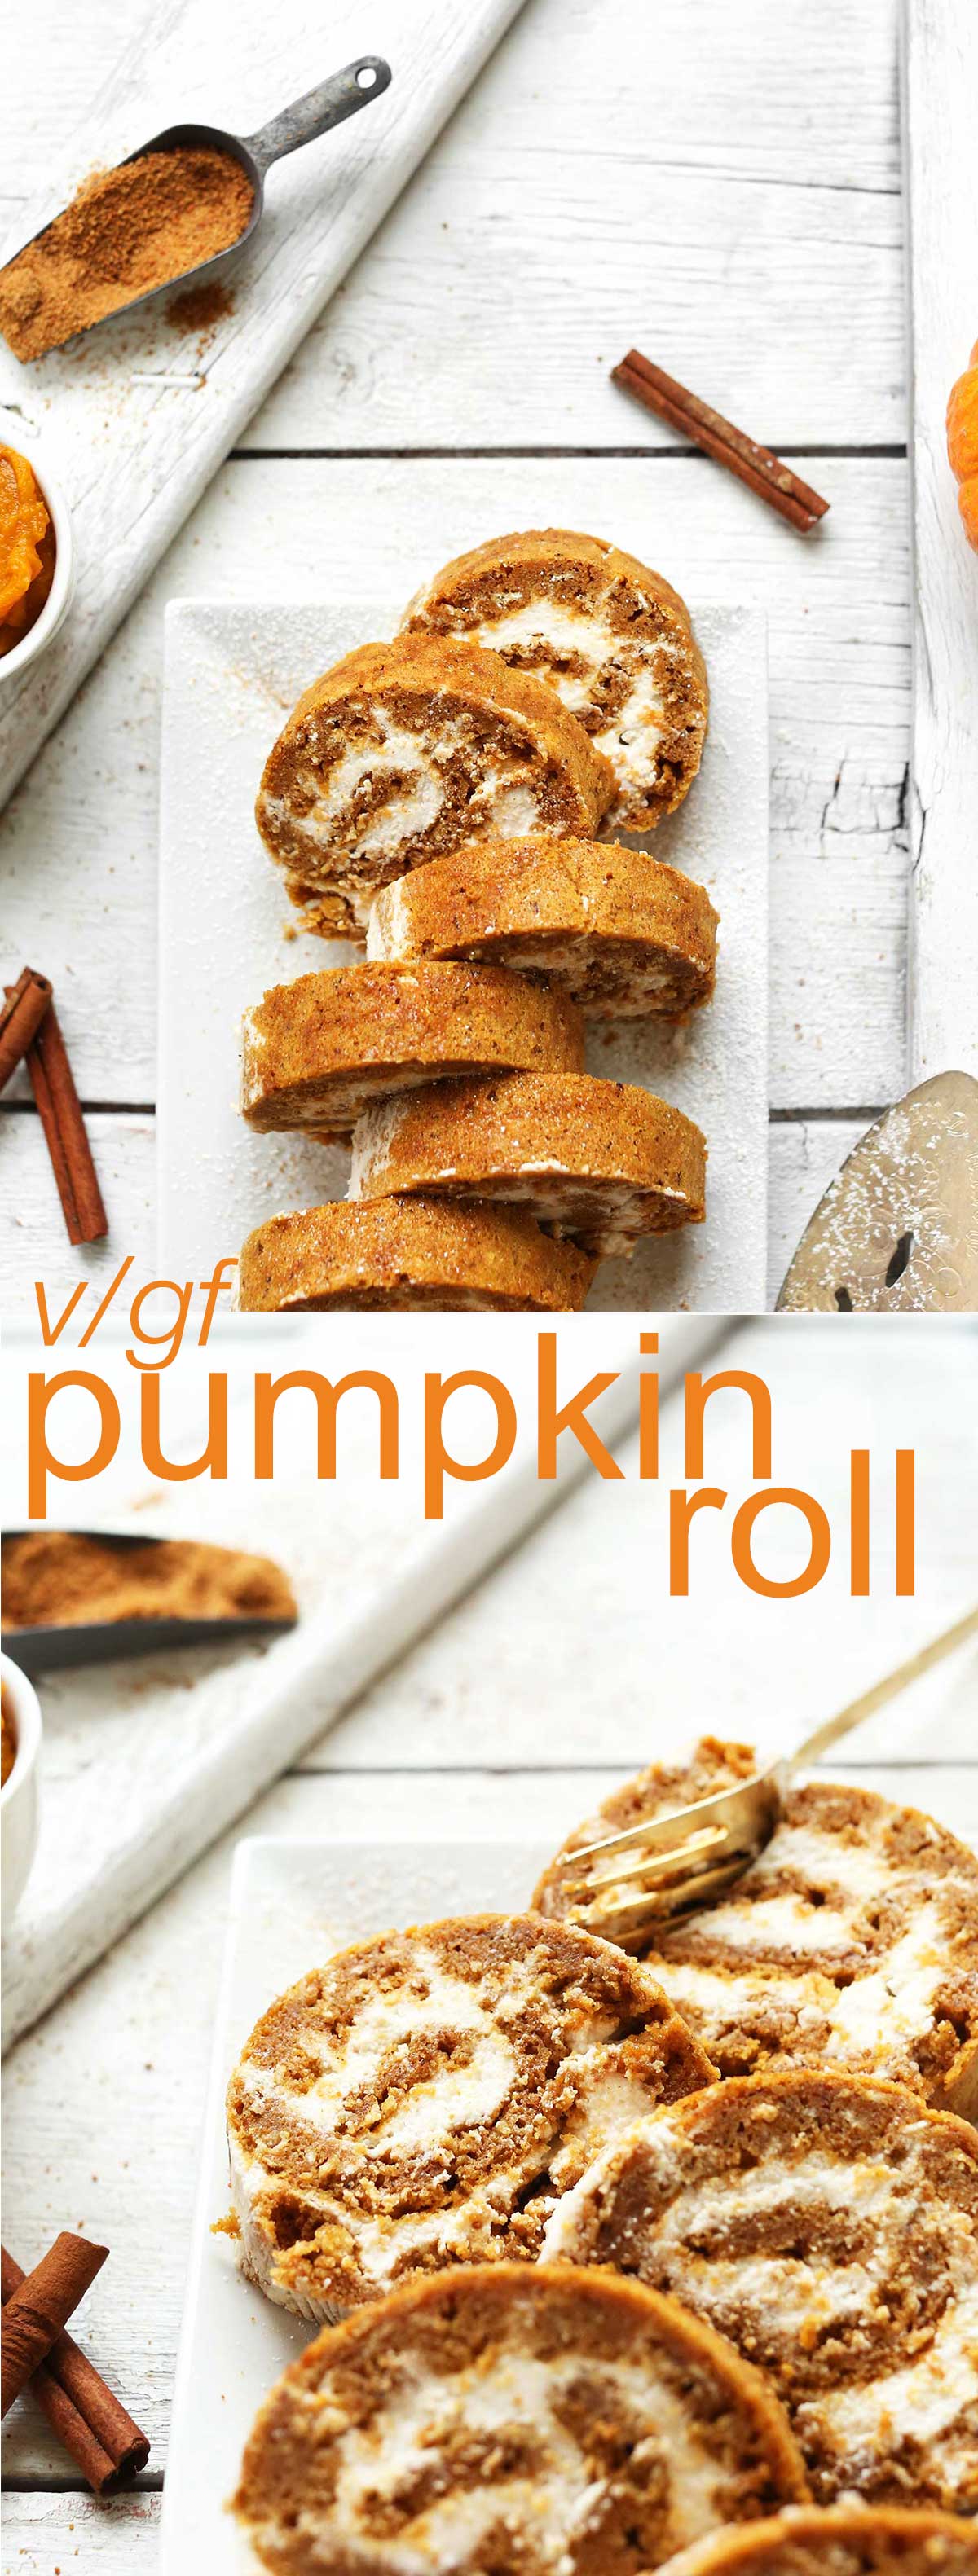 Vegan-gluten-free-pumpkin-roll-easy-to-make-and-so-delicious-vegan-glutenfree-pumpkin